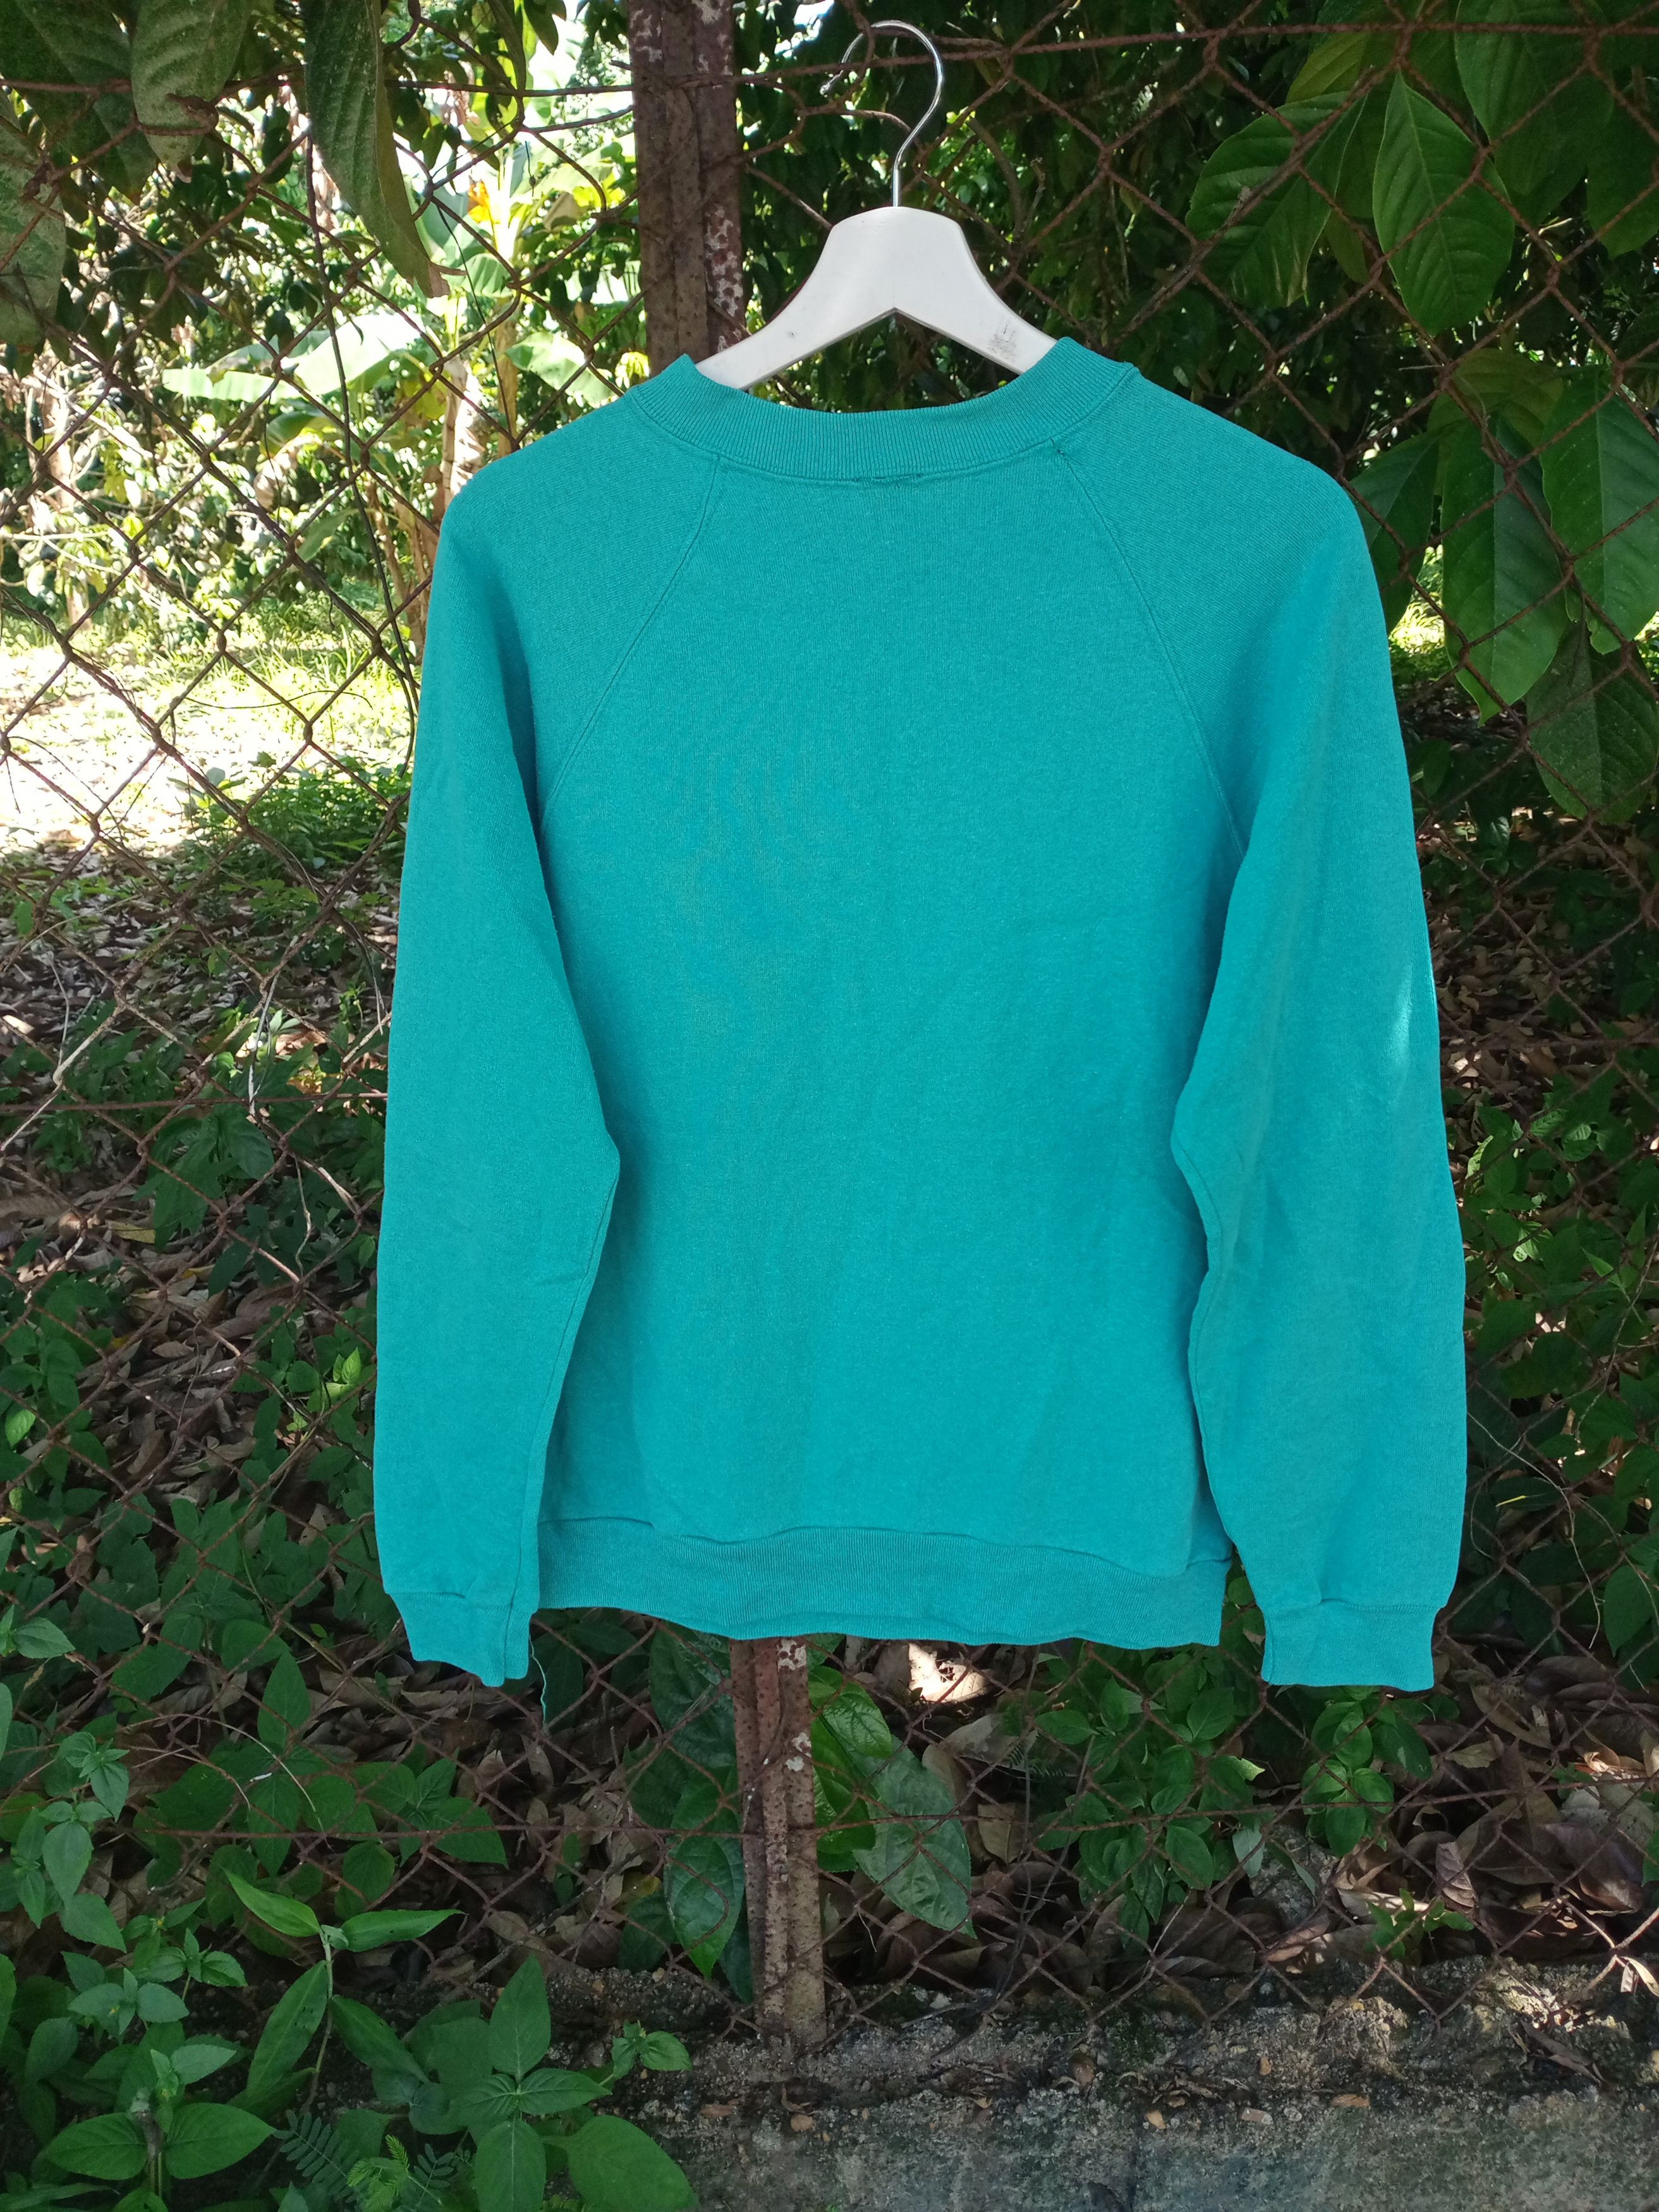 Vintage Vintage 90s Charlotte Hornets Sweatshirt Size US S / EU 44-46 / 1 - 6 Preview